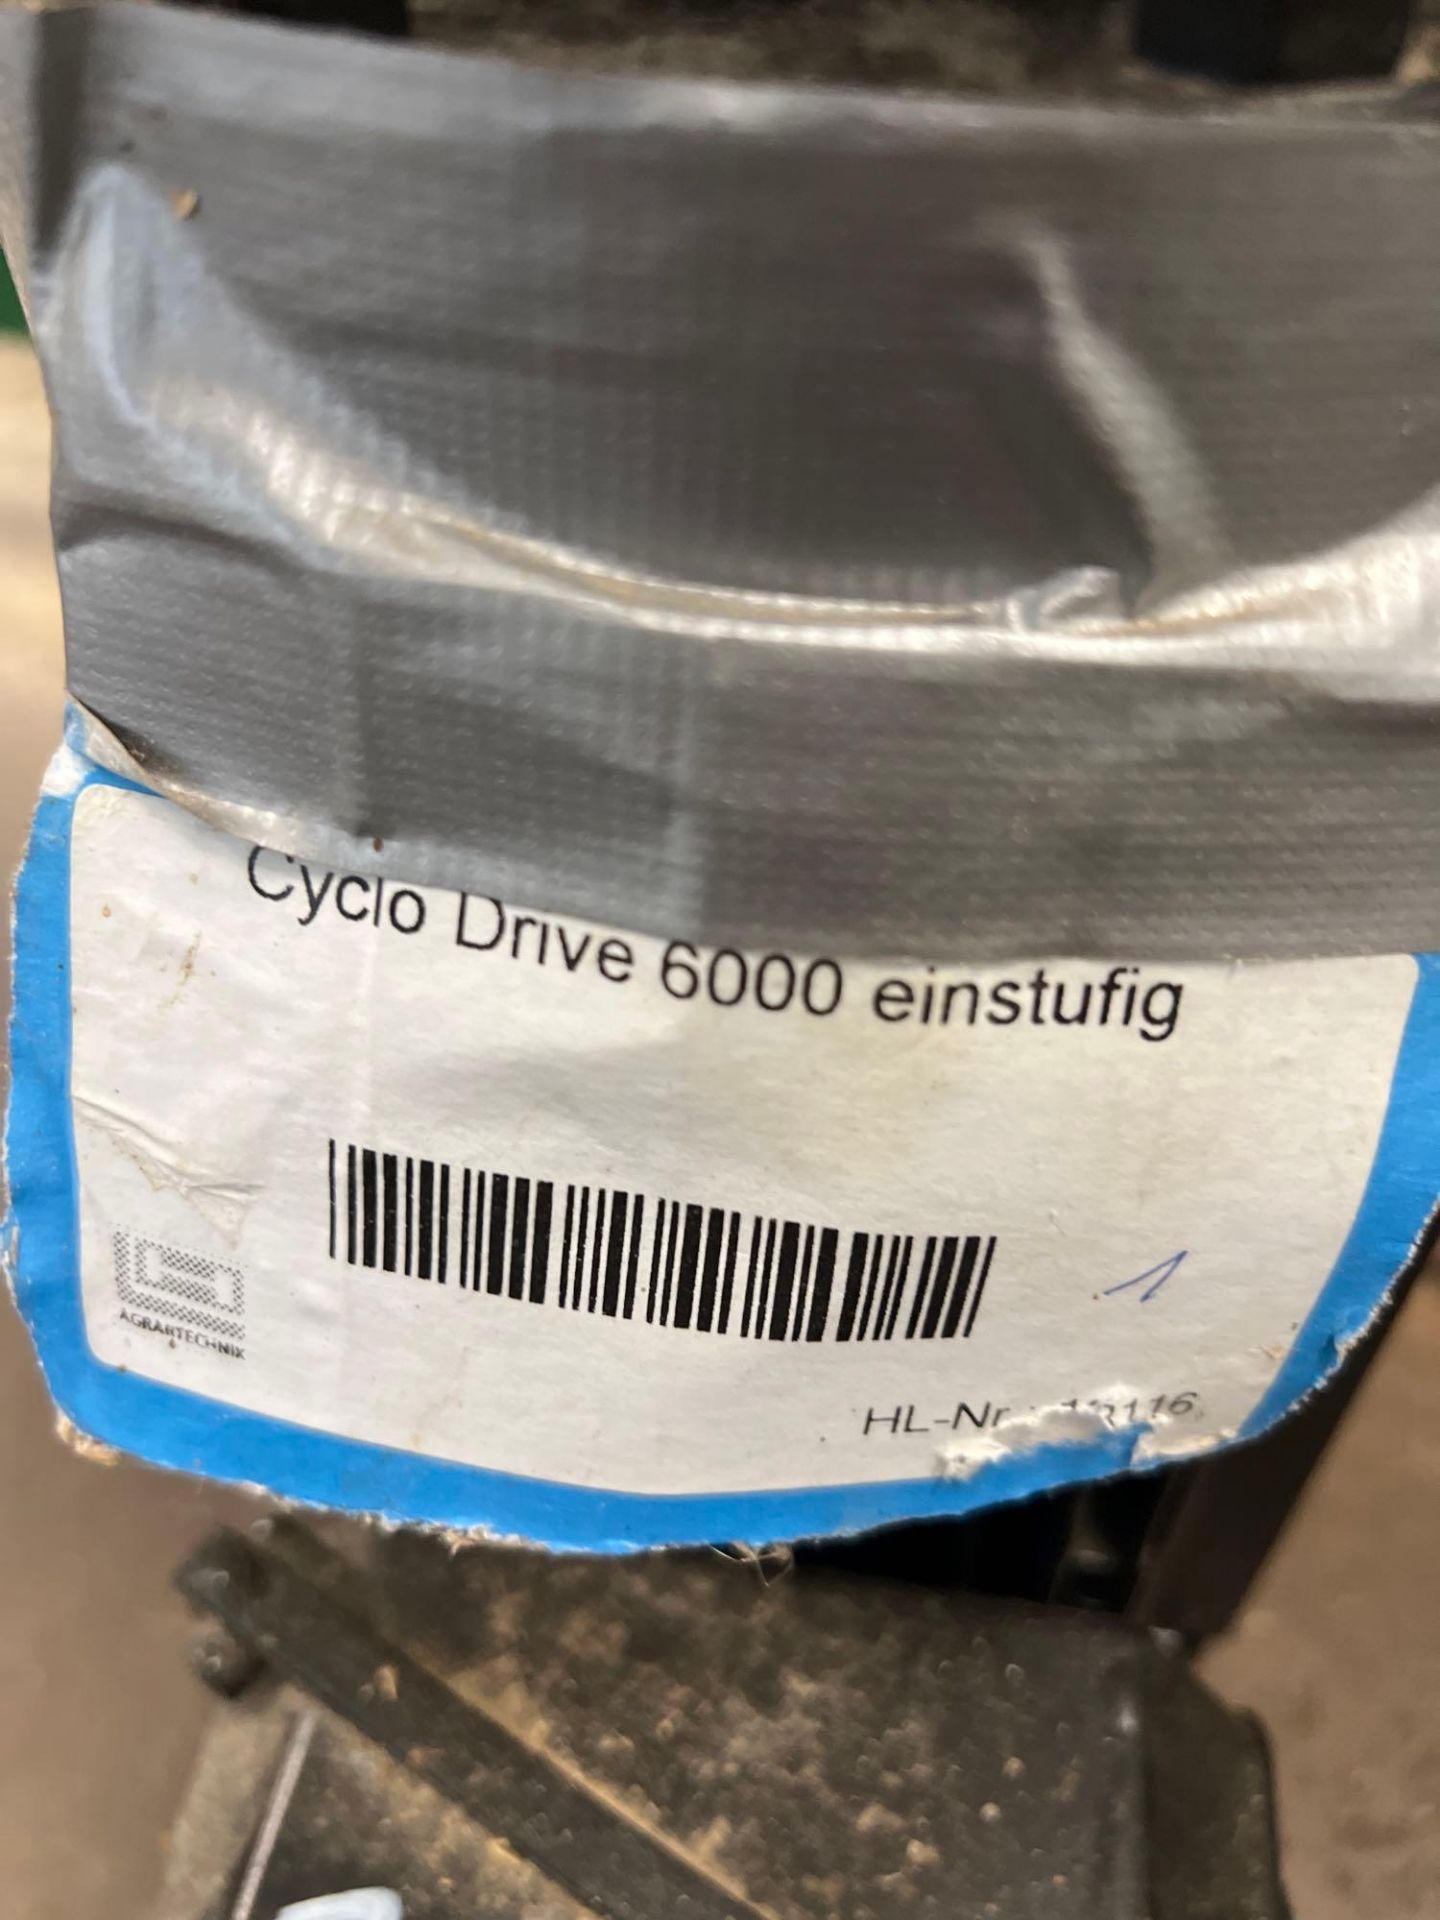 Cyclo drive 6000 - Bild 2 aus 2